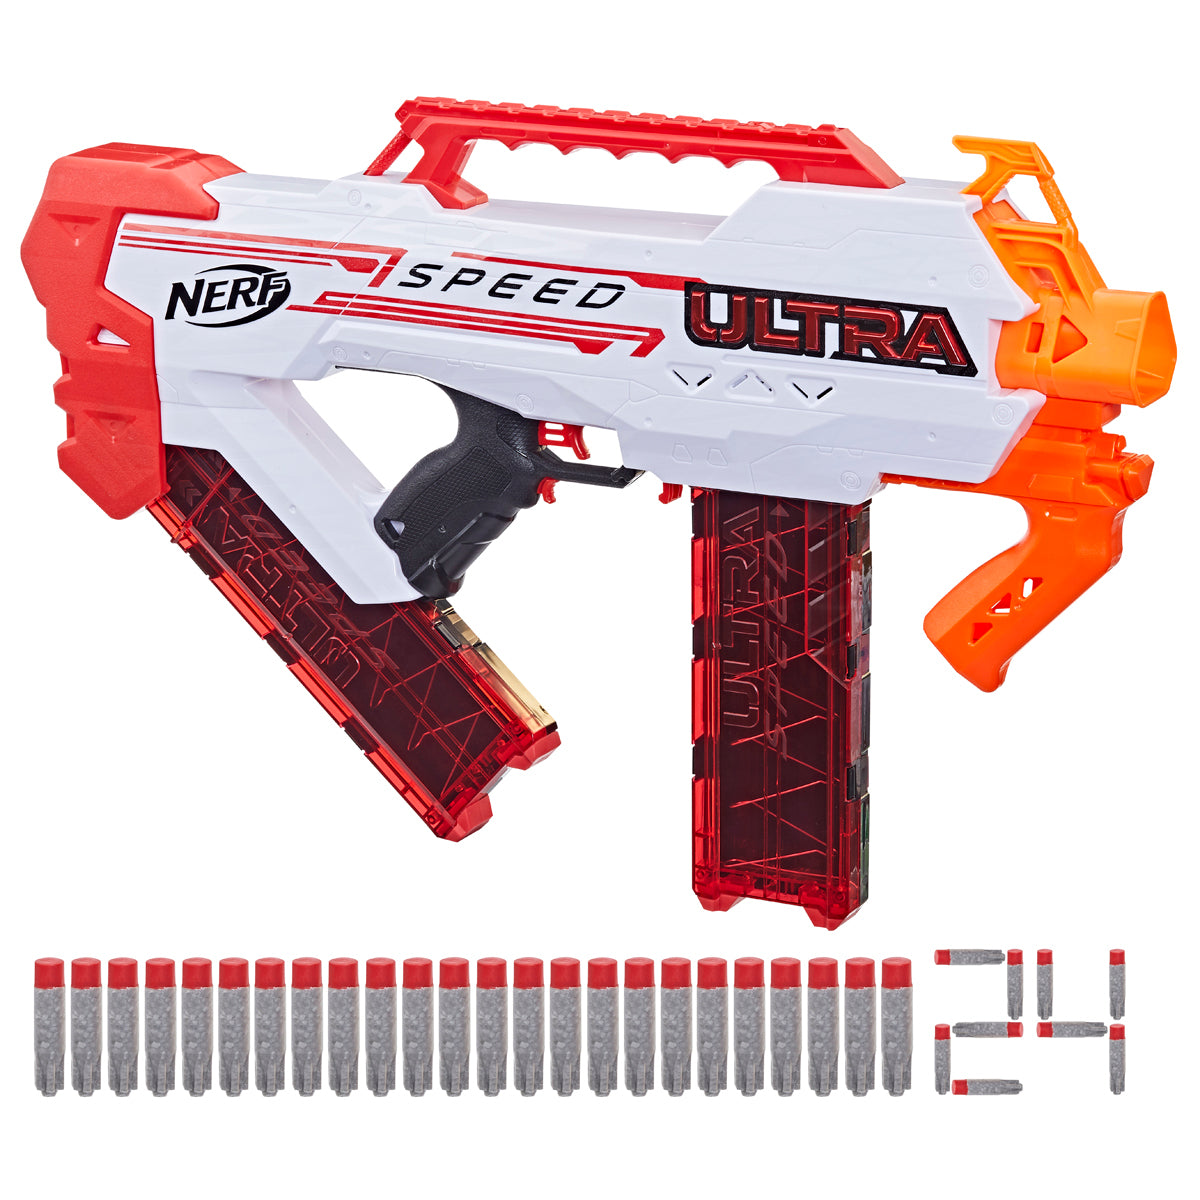 Nerf Ultra Speed Fully Motorized Blaster with 24 Nerf AccuStrike Ultra Darts